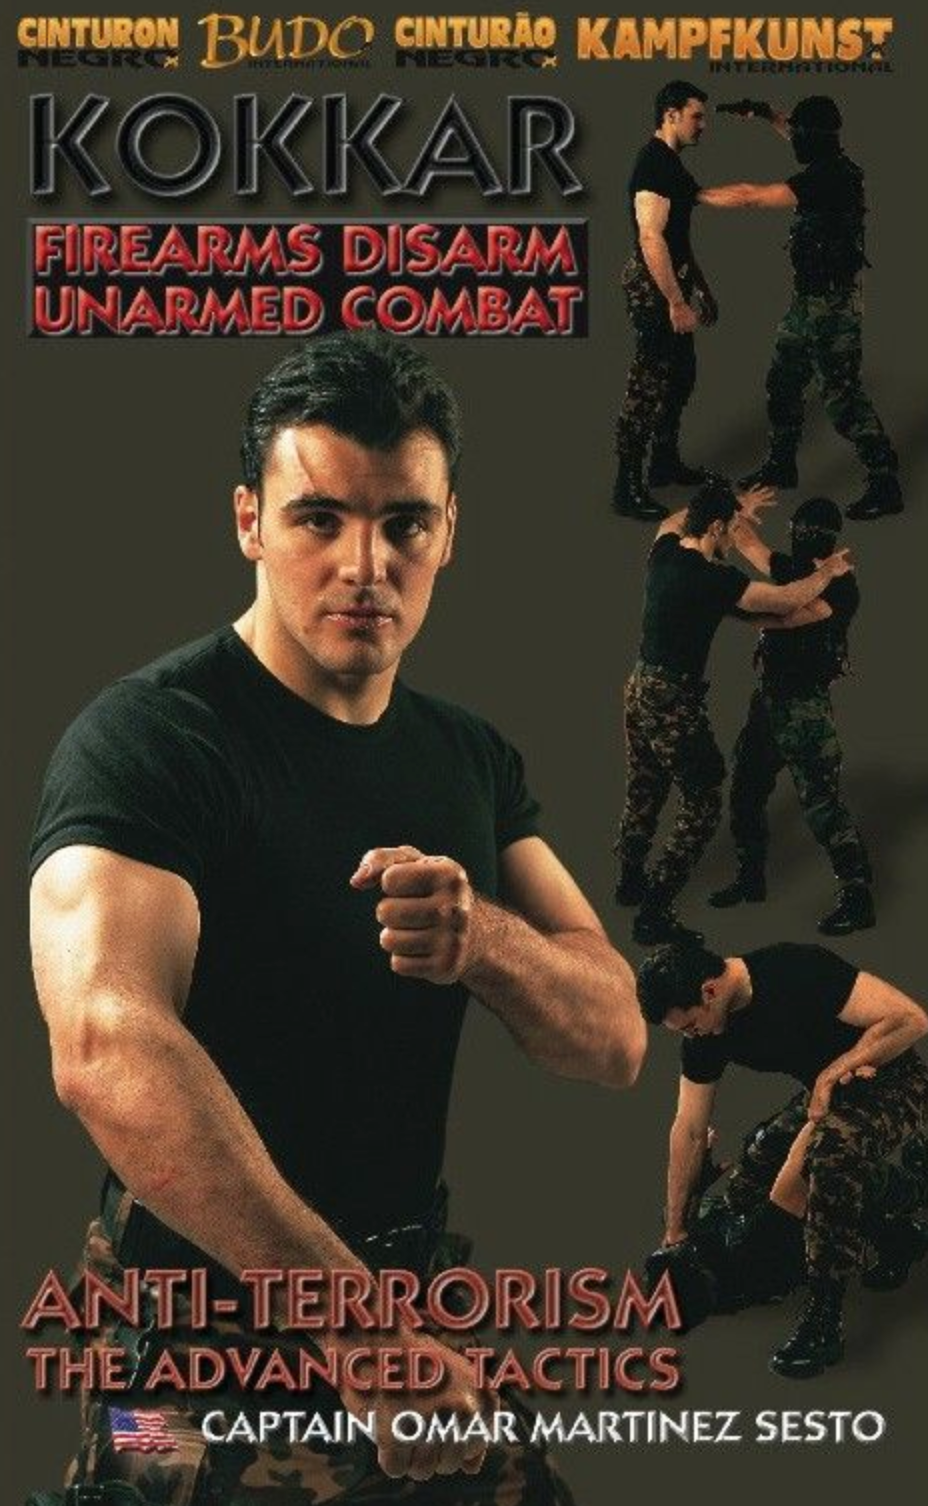 Kokkar Anti-Terrorism Advanced Tactics DVD by Omar Martinez Sesto - Budovideos Inc